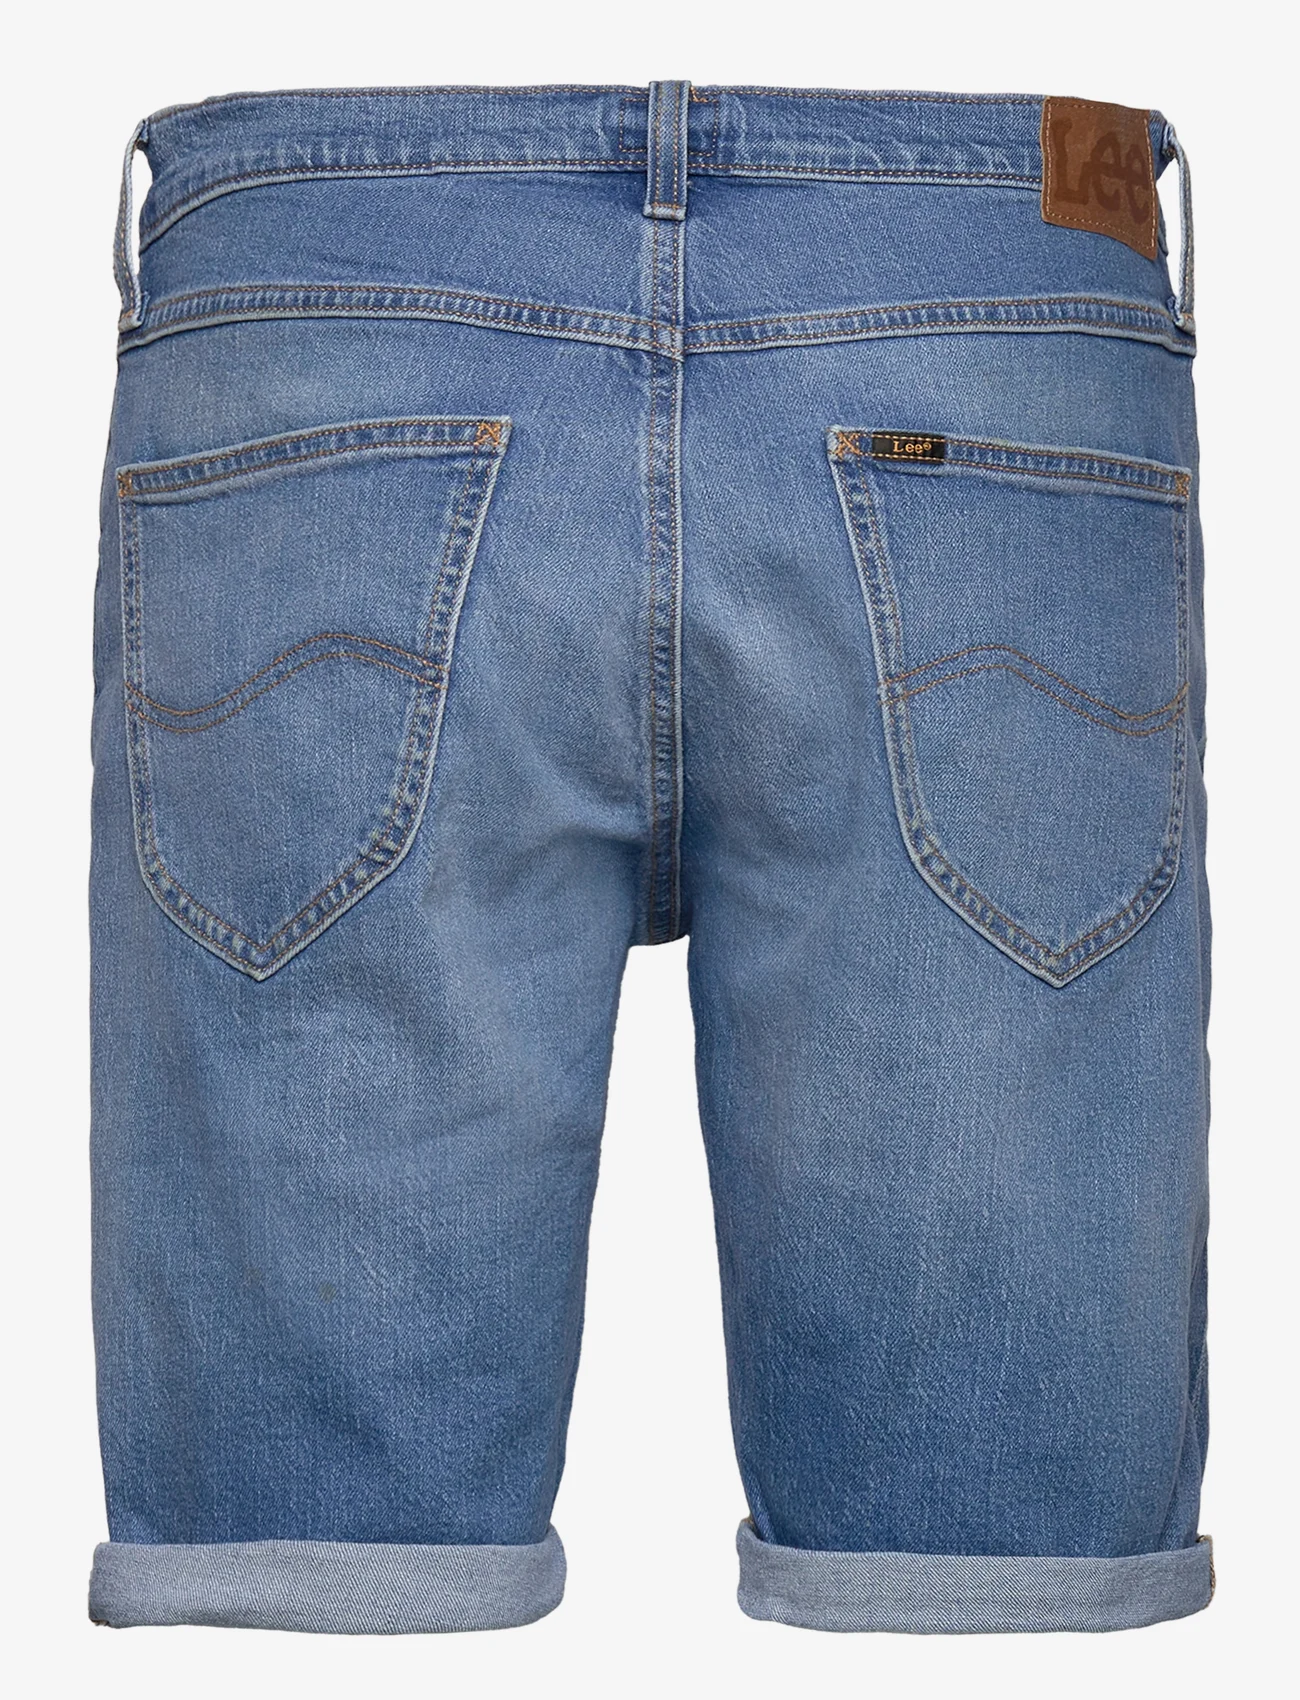 Lee Jeans - 5 POCKET SHORT - farkkushortsit - sea side - 1